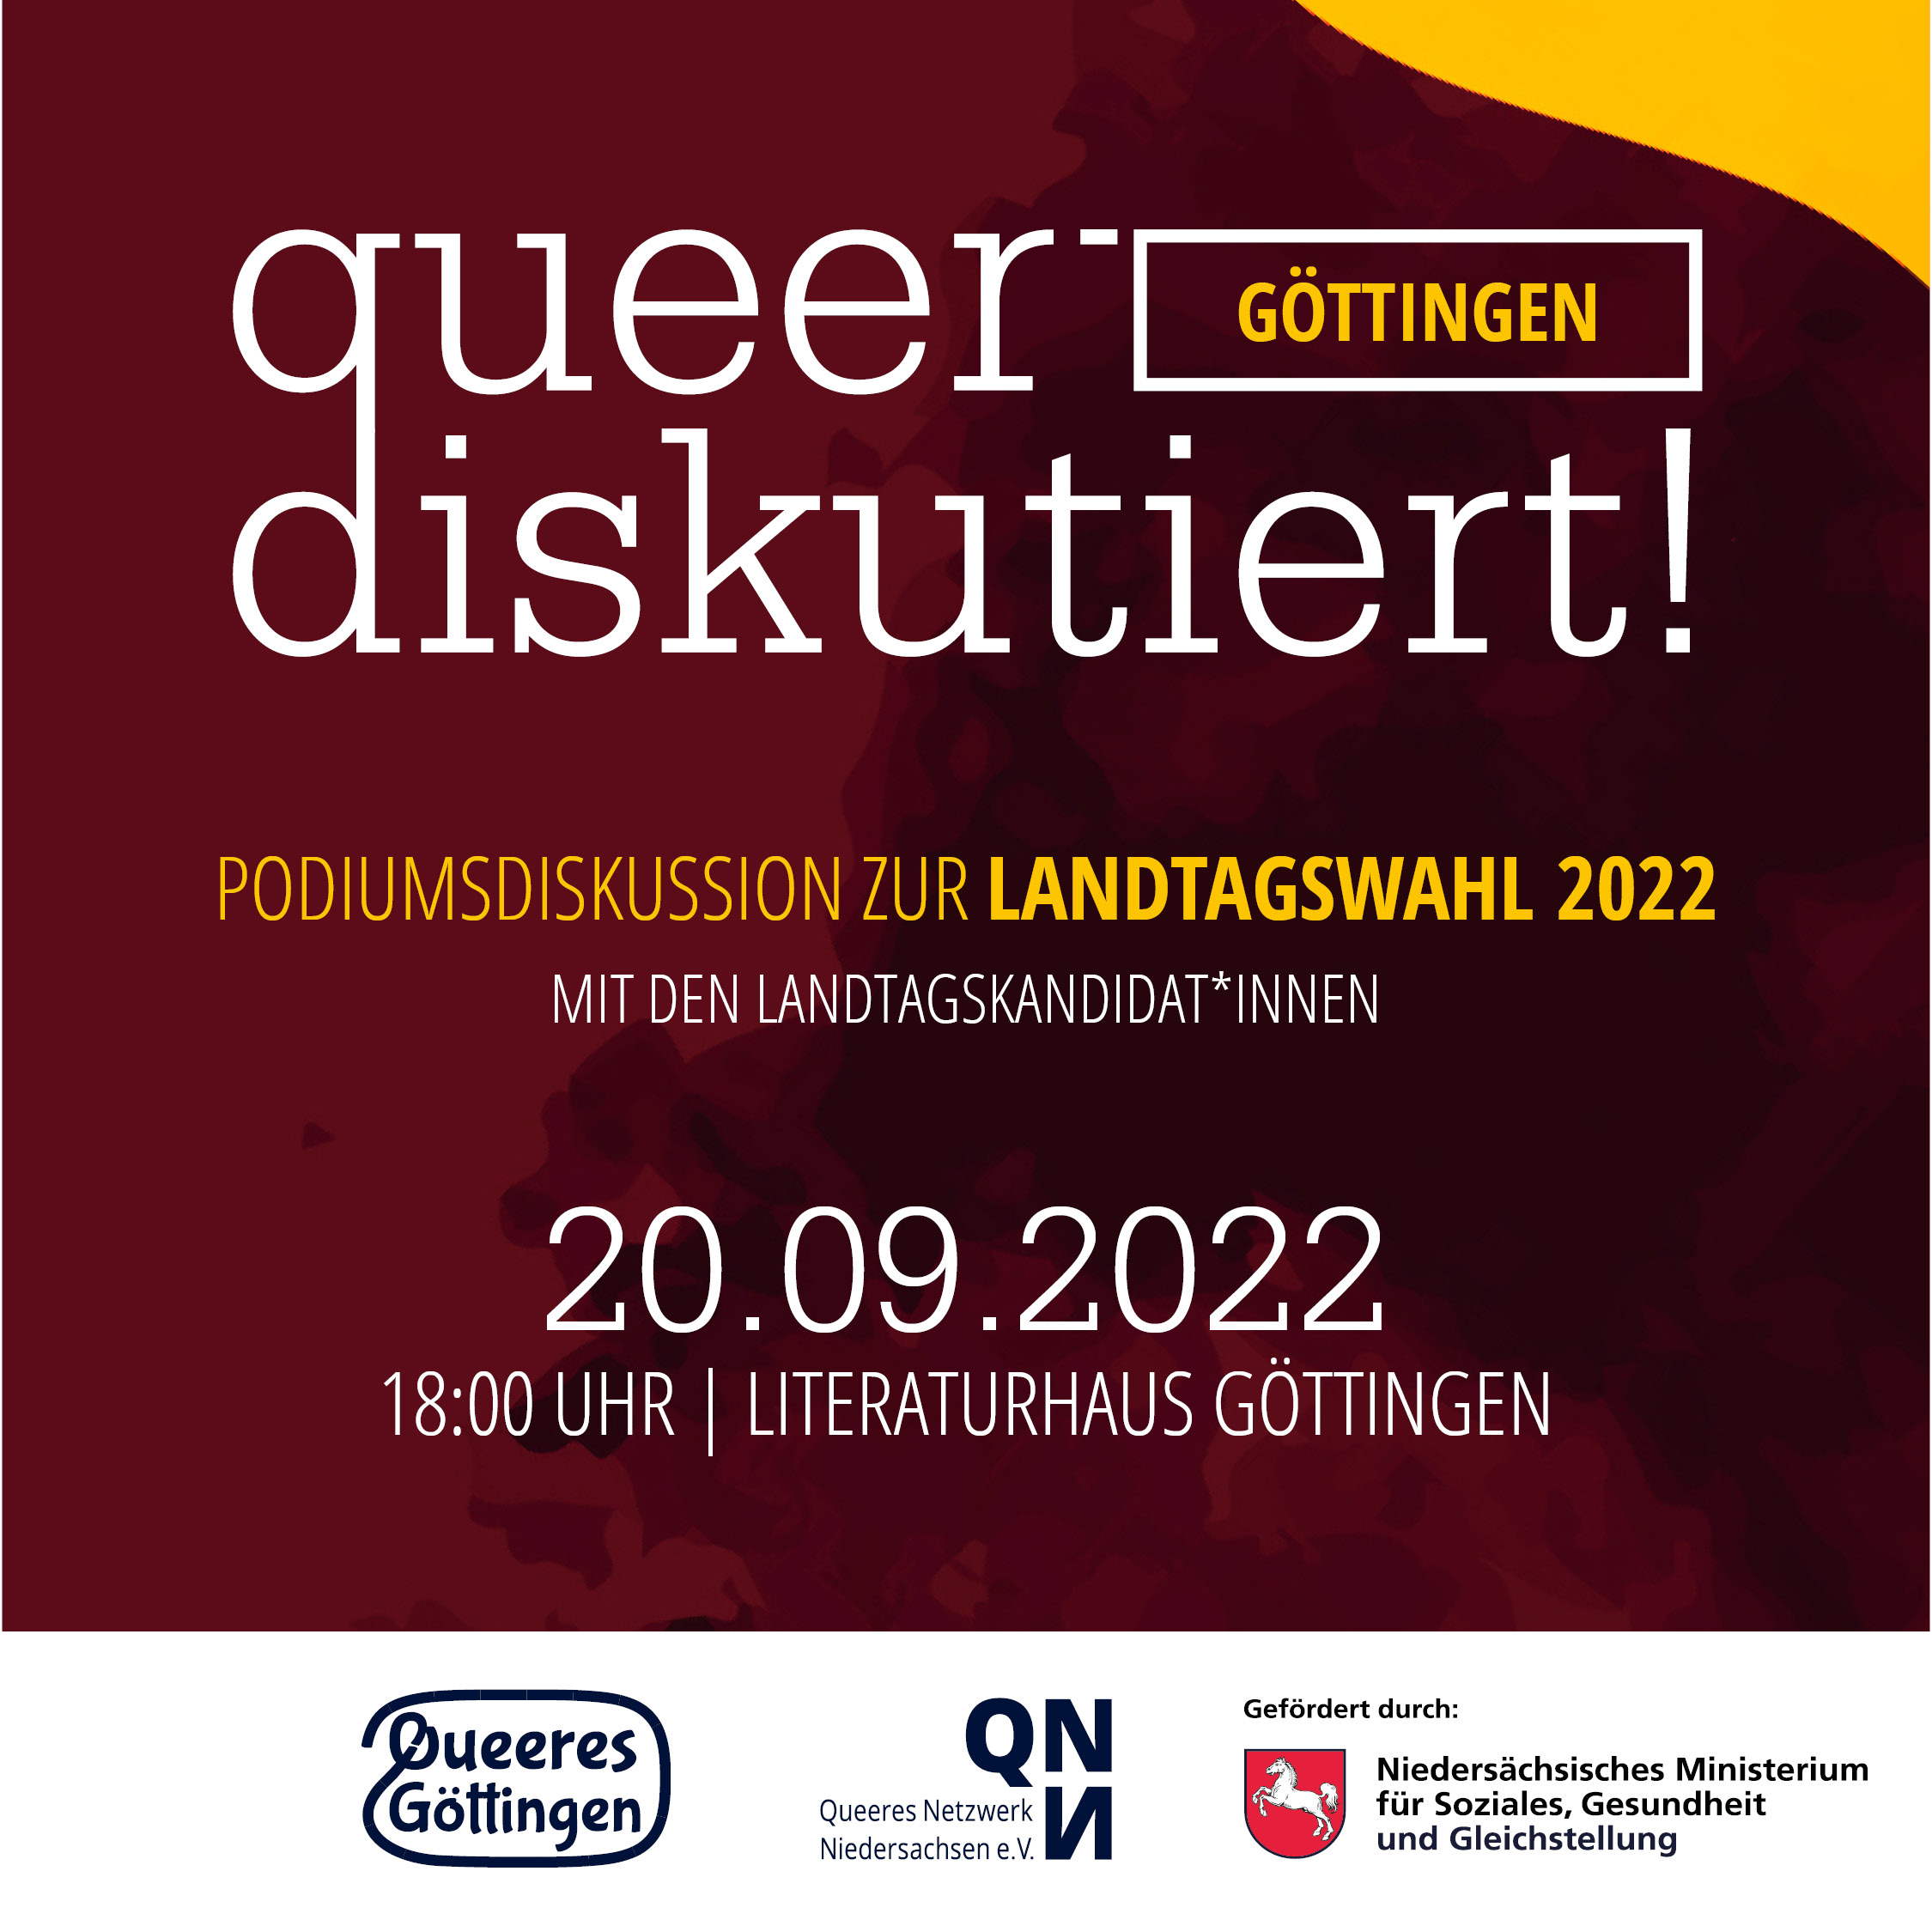 queer diskutiert - Diskussion zur Landtagswahl